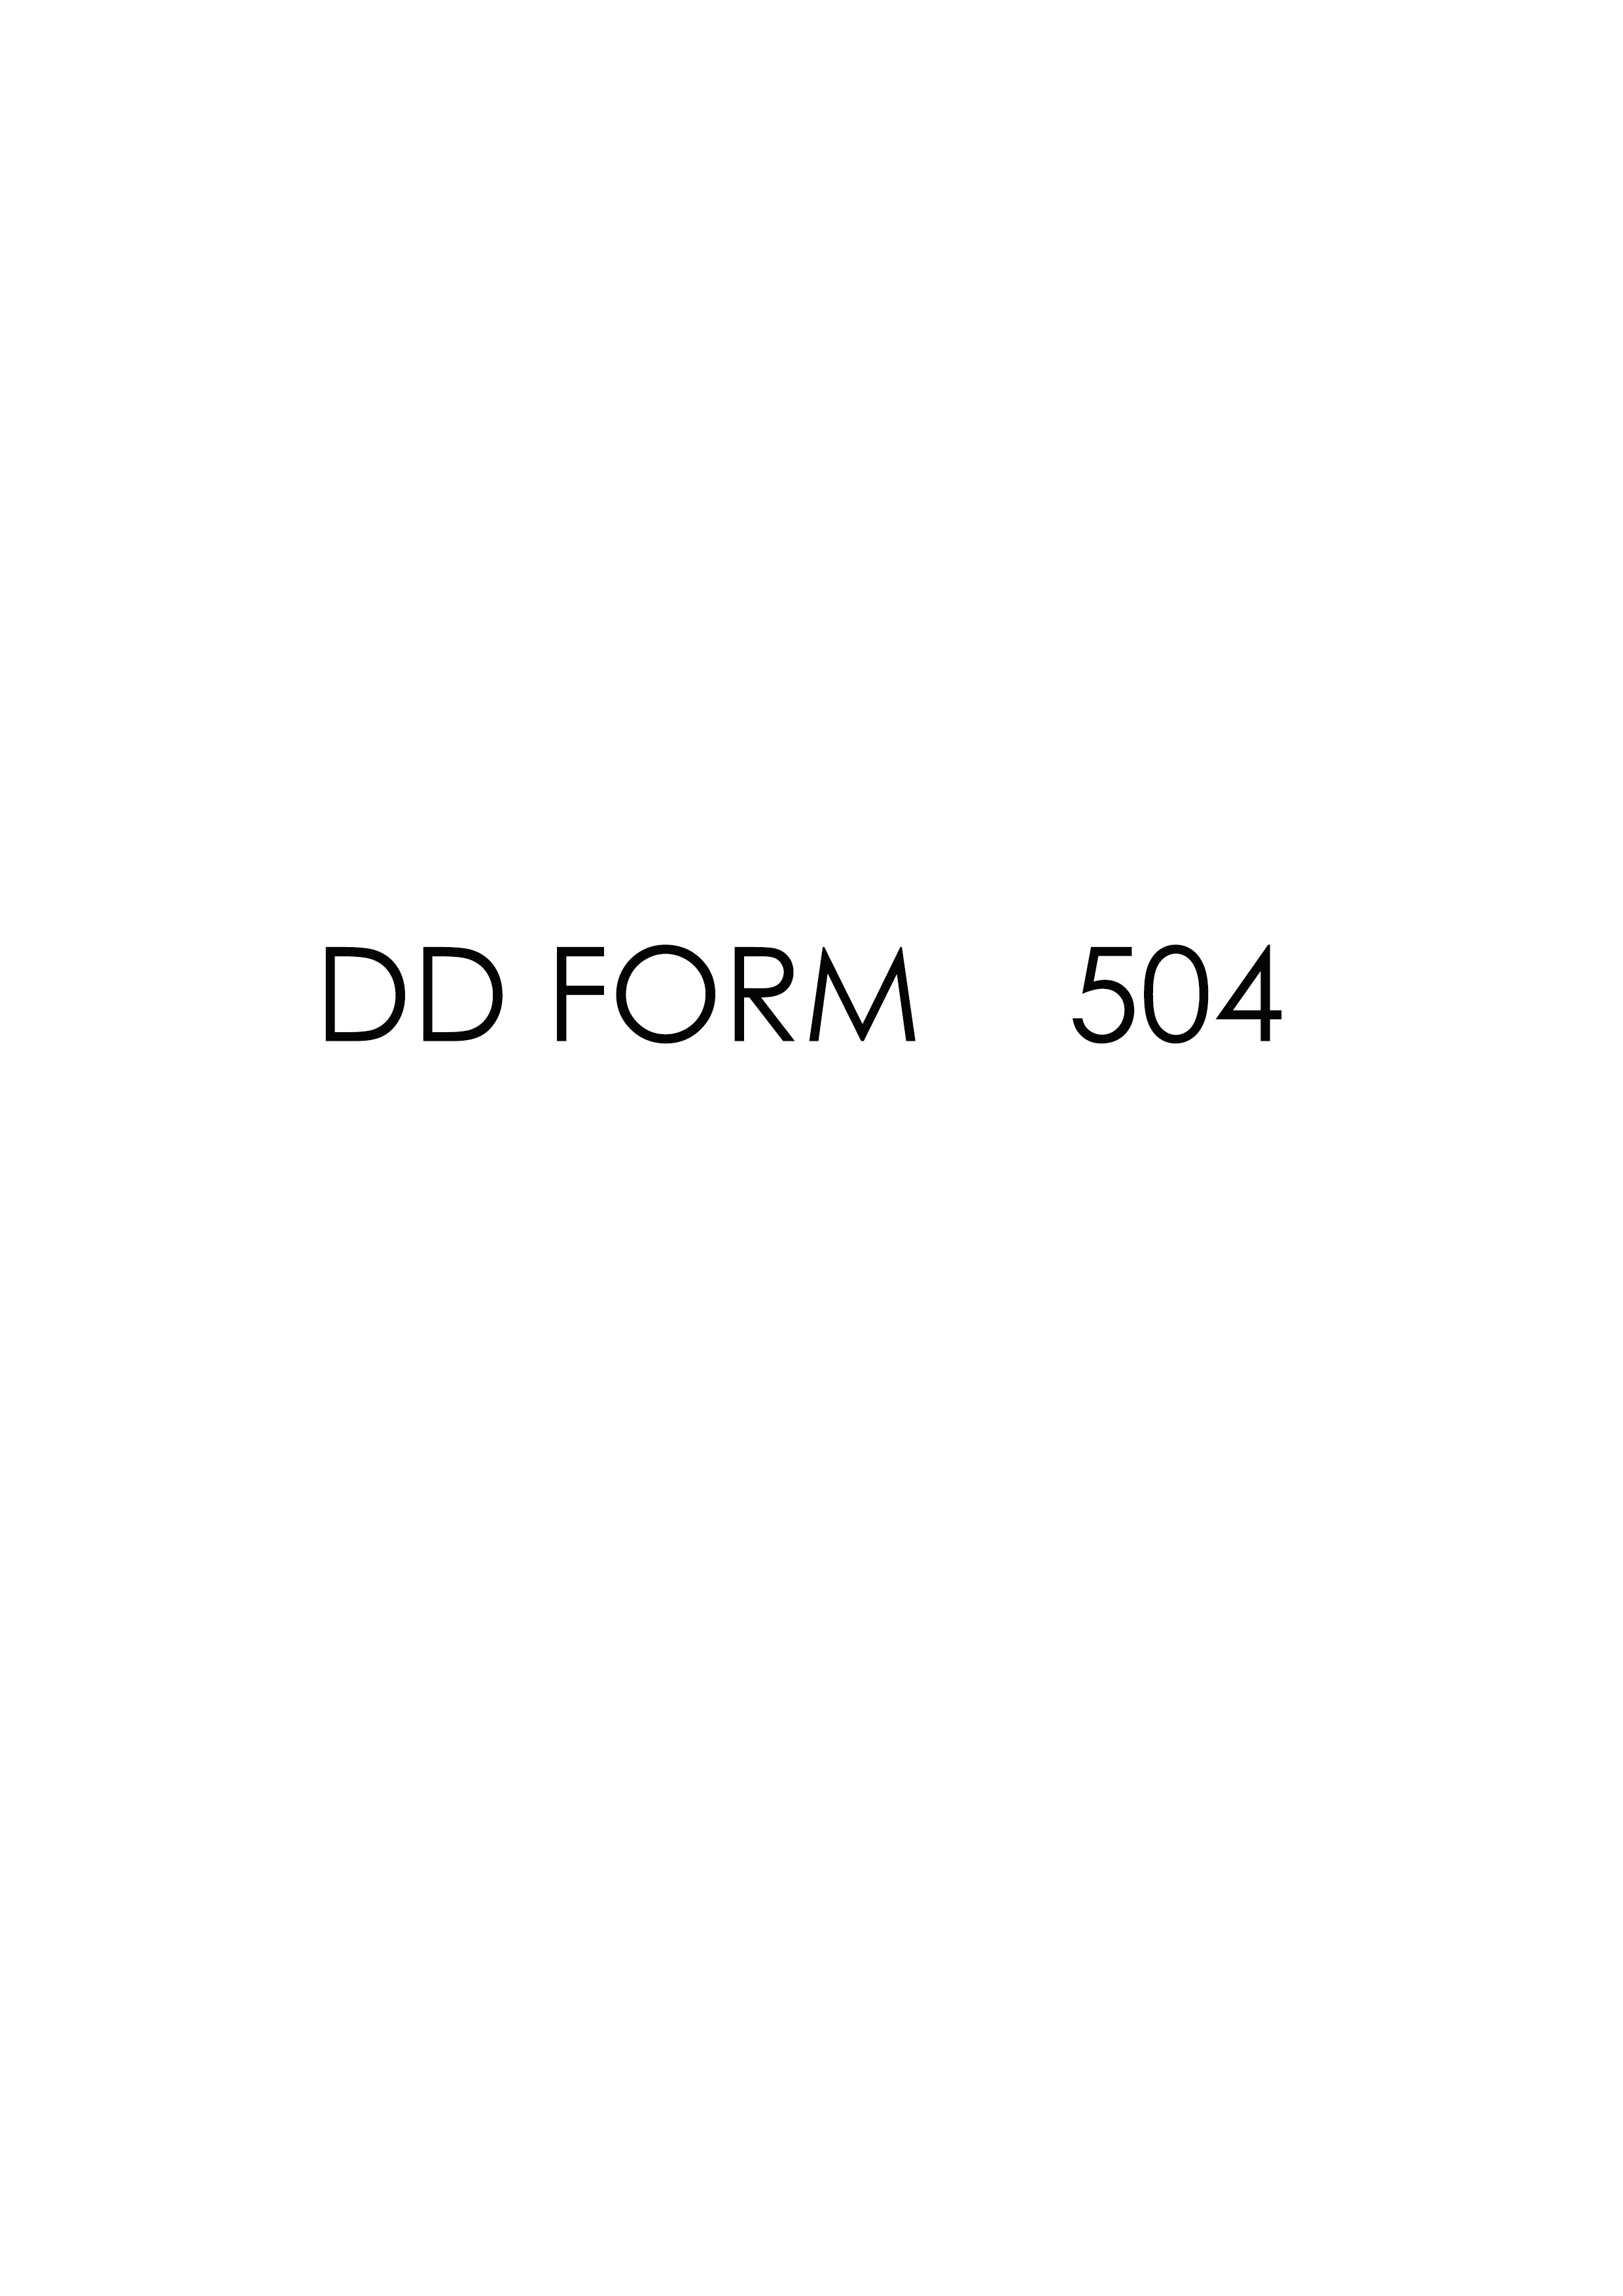 Download dd 504 Form